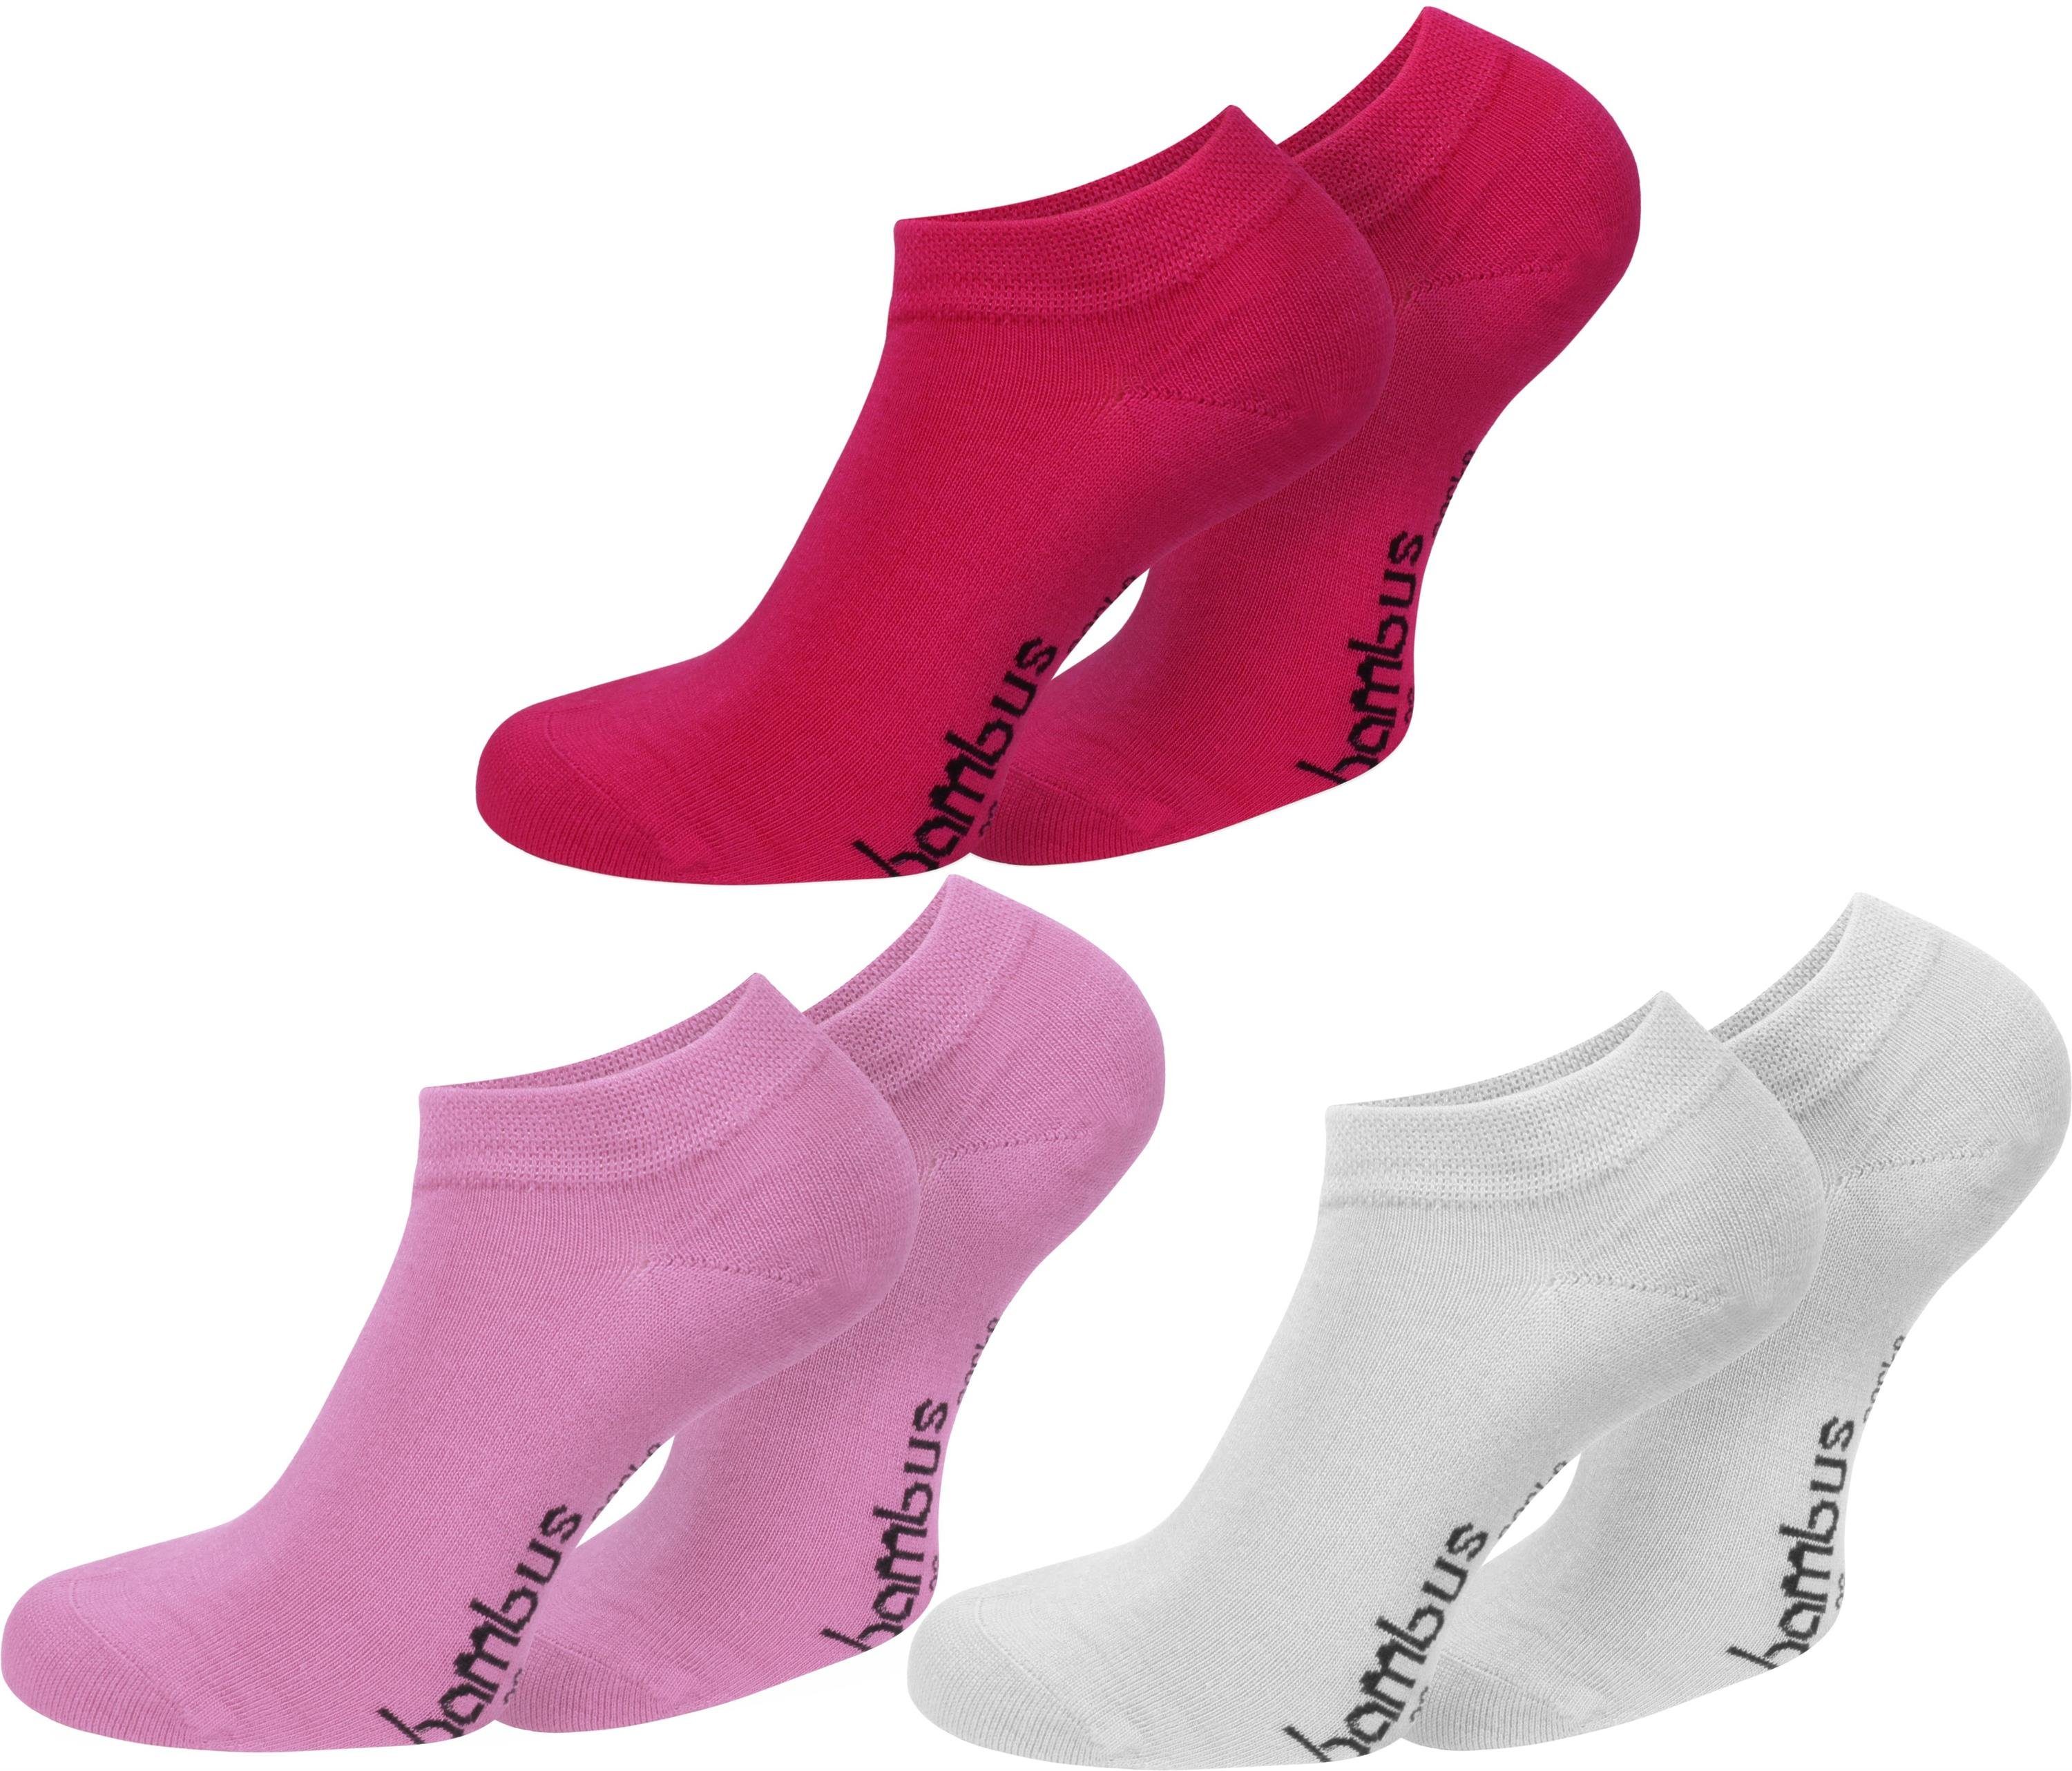 Sneakers Pink/Rosa/Weiß 6 Viskose Bambus-Gesundheitssocken 6 Paar) seidenweich Sneakersocken normani durch Paar (6er-Set,